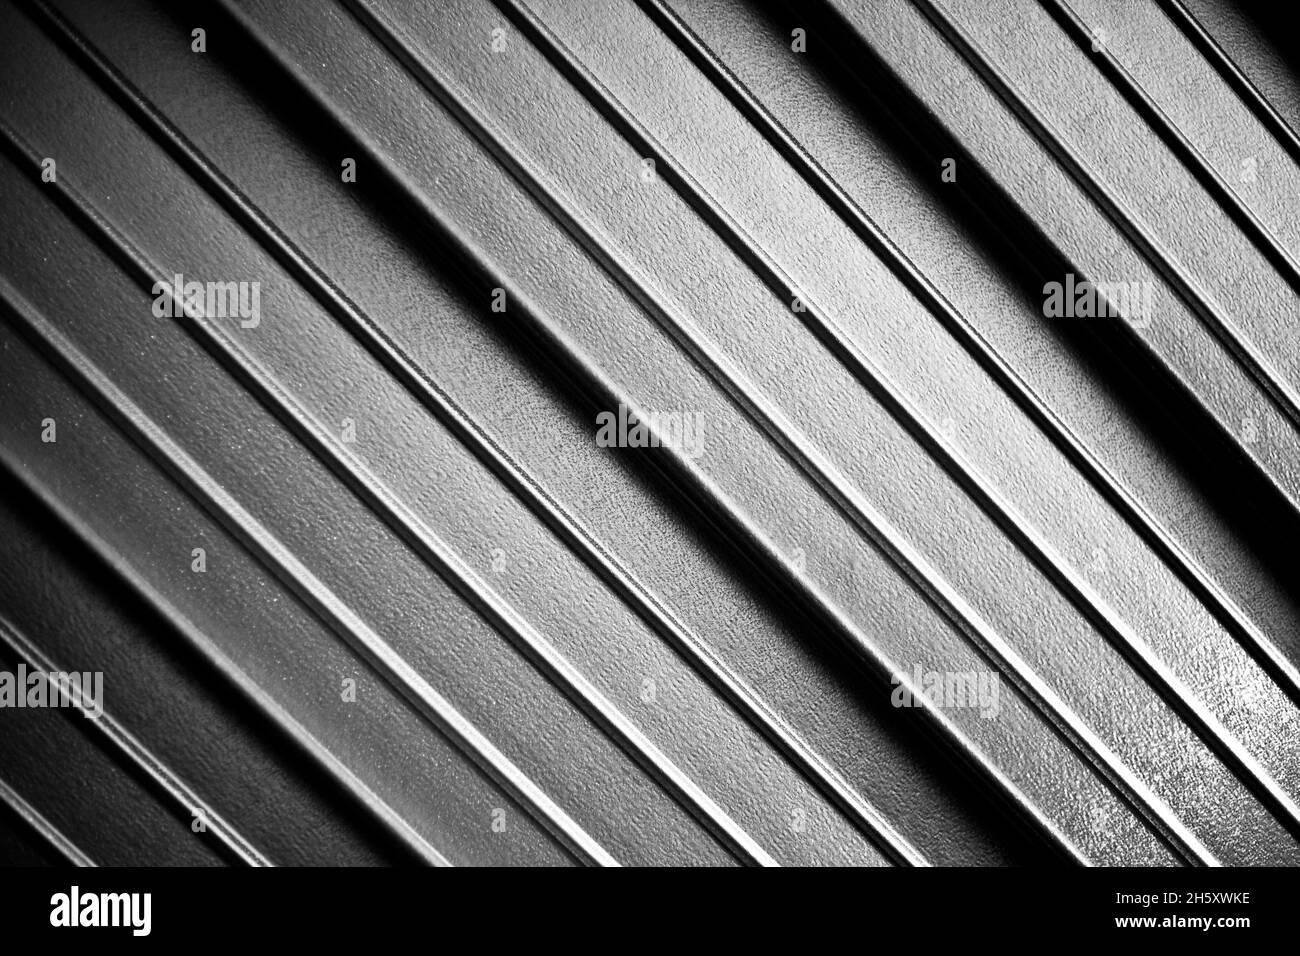 metallic corrugate surface Stock Photo